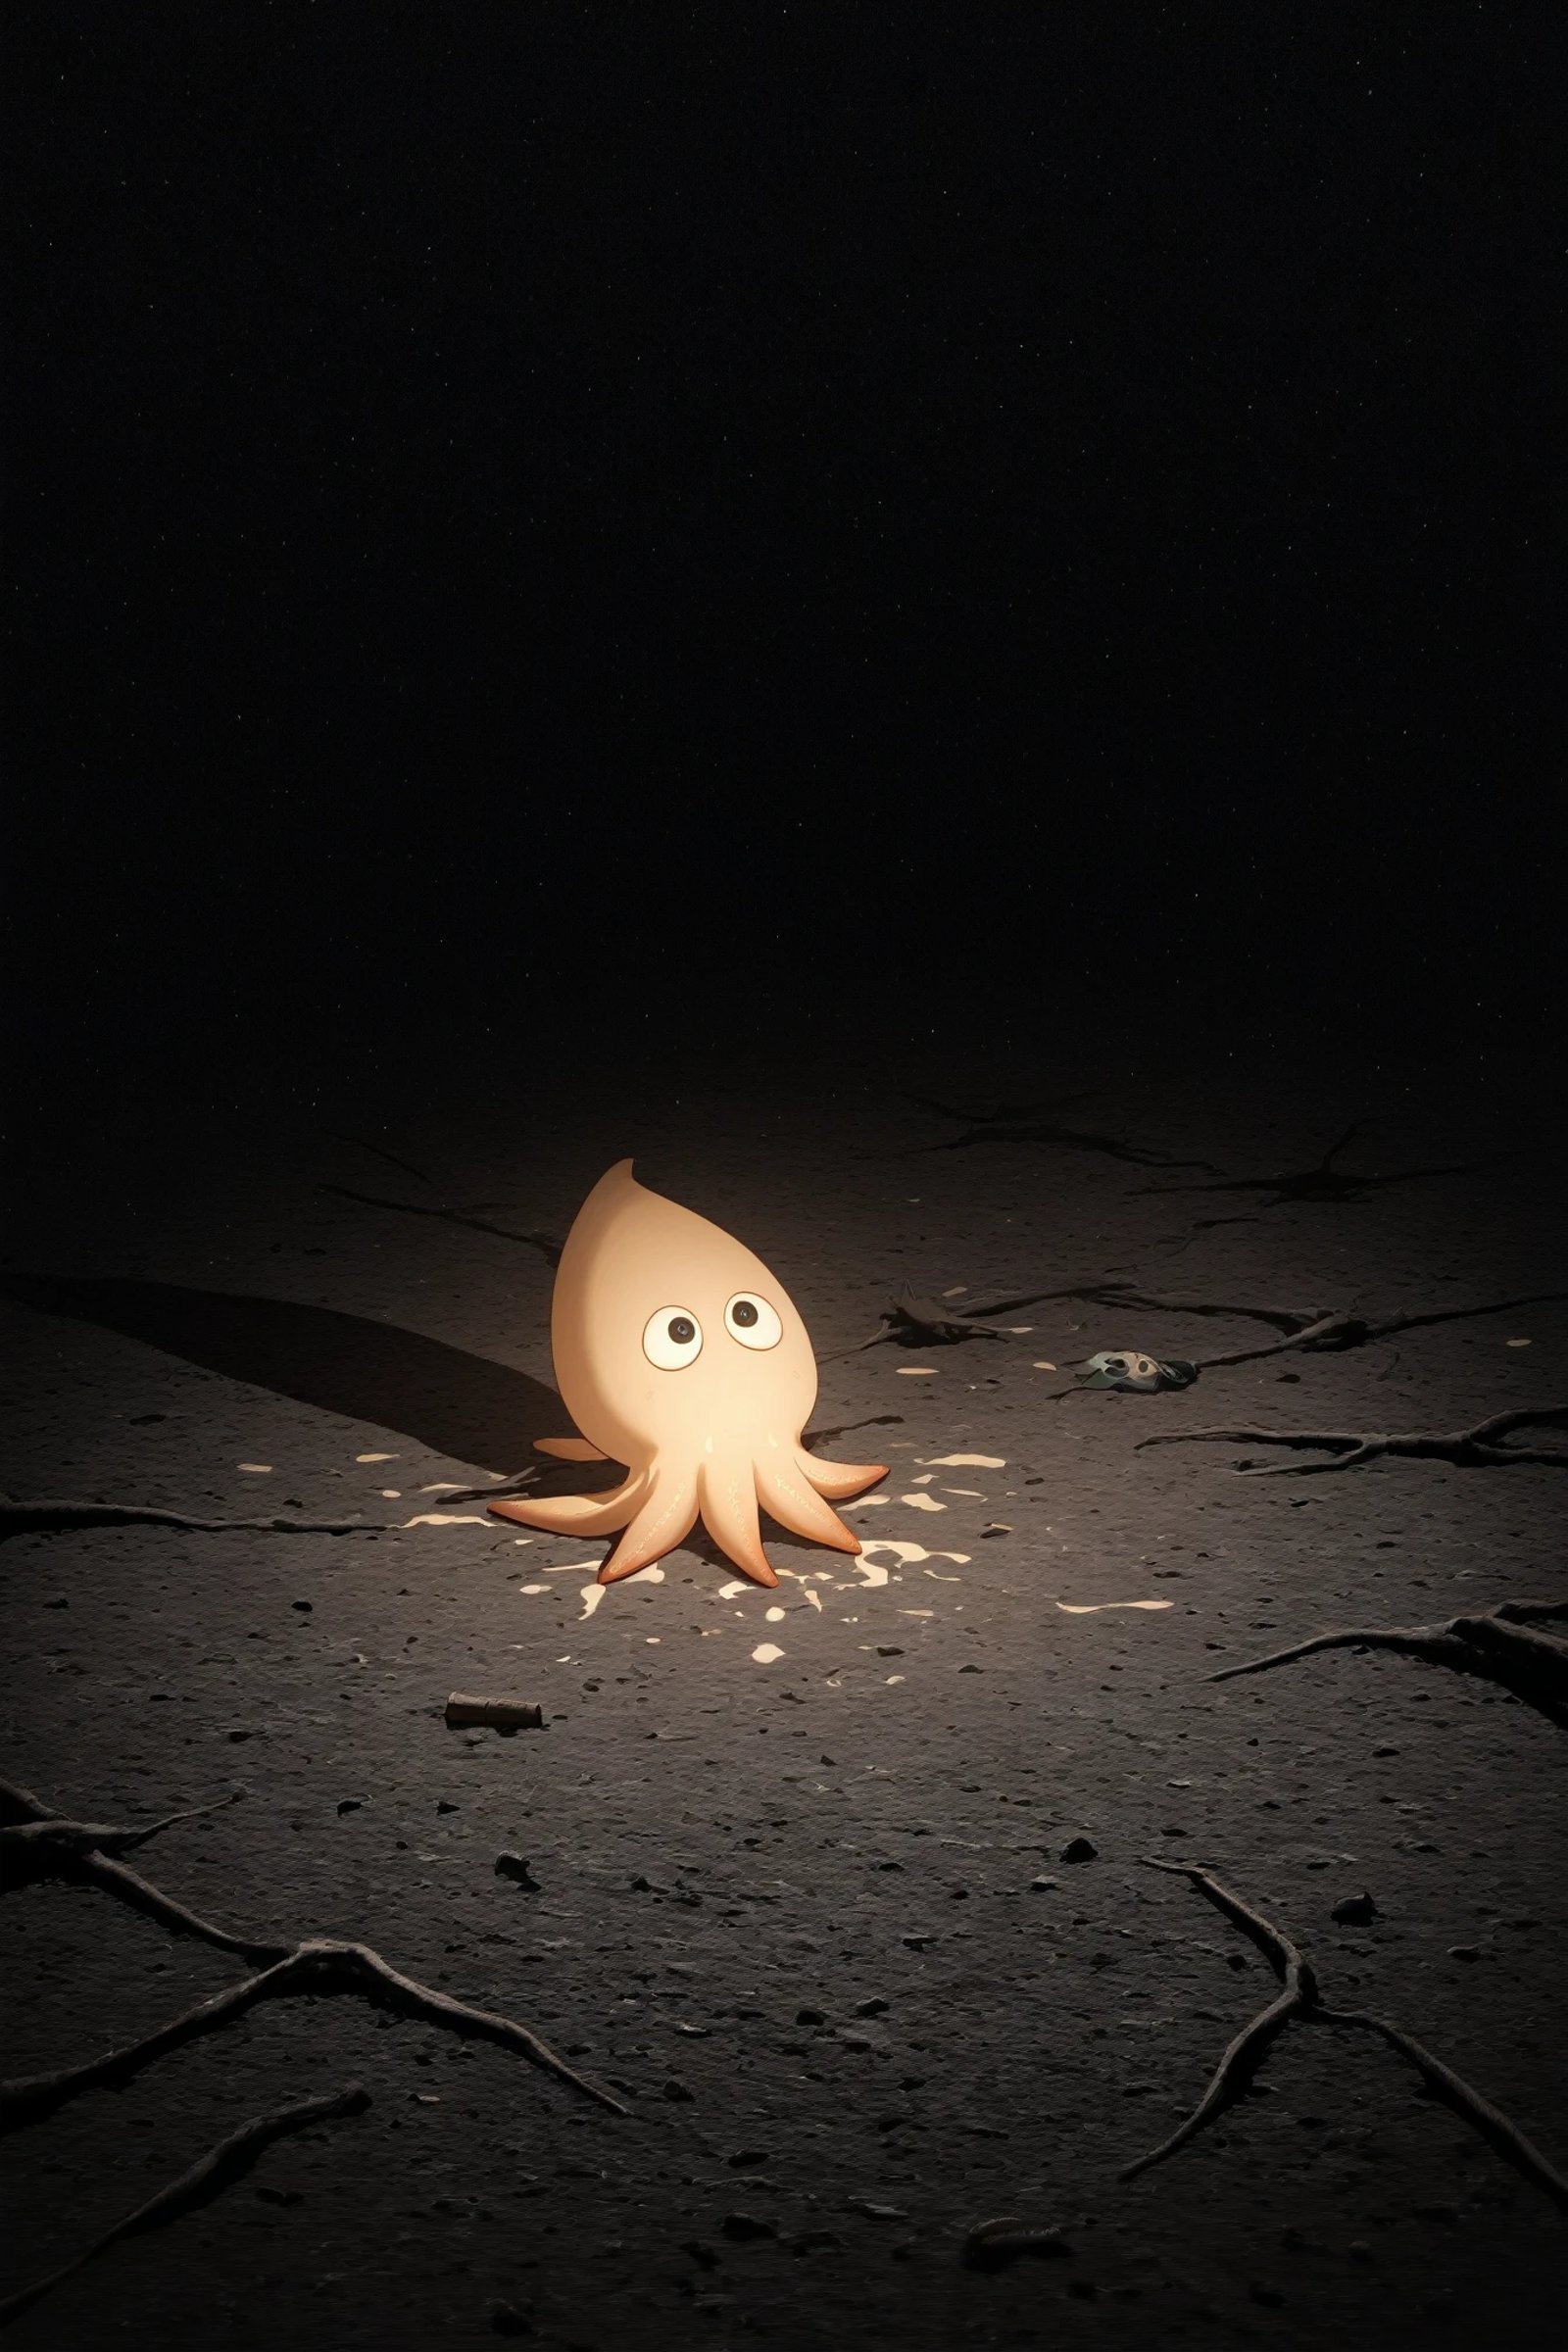 squid on the ground in the dark